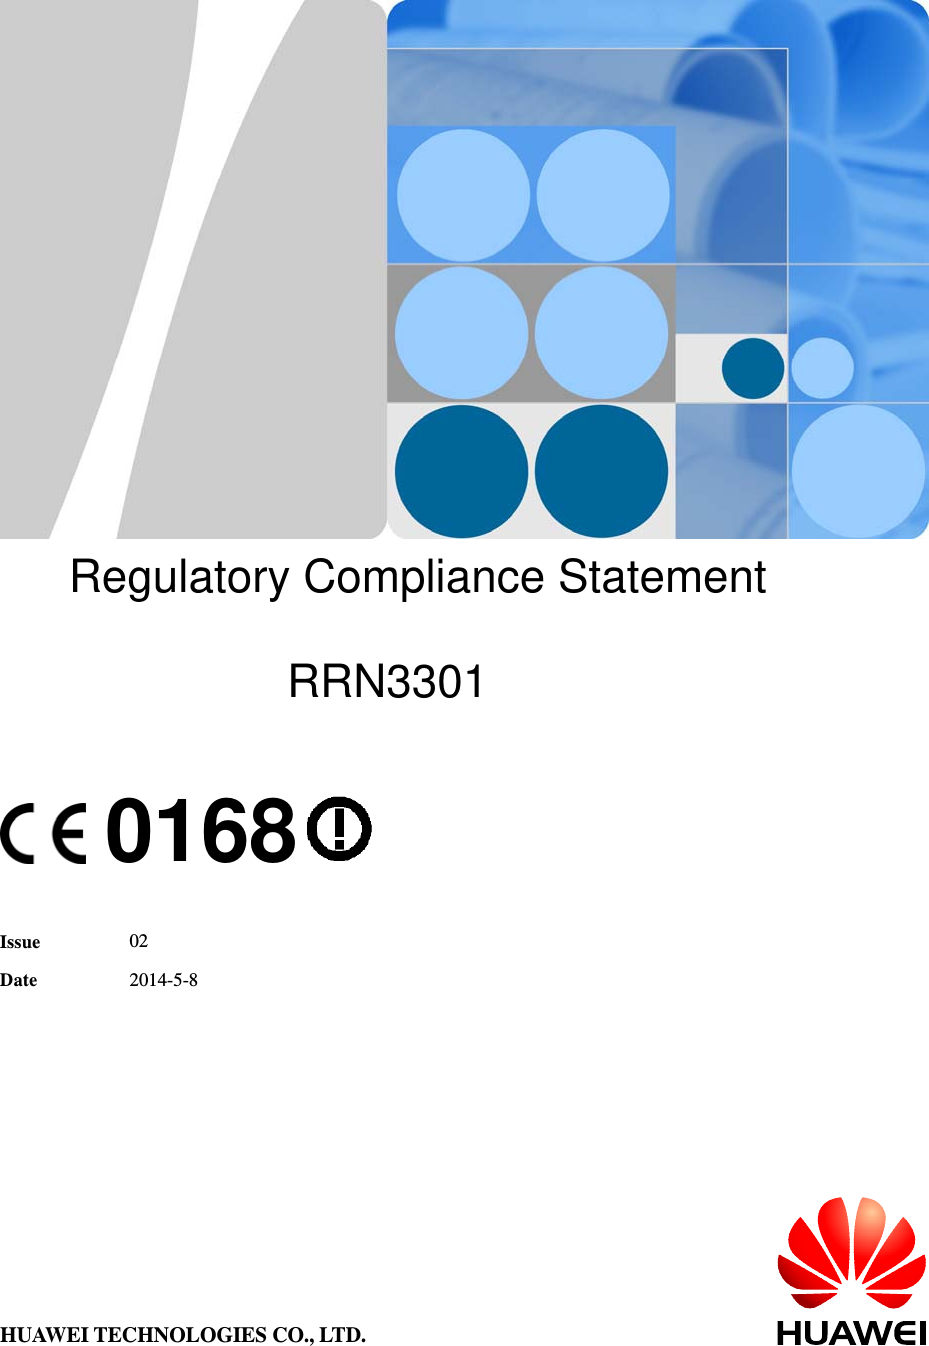             Regulatory Compliance Statement  RRN3301    0168   Issue  02 Date  2014-5-8 HUAWEI TECHNOLOGIES CO., LTD. 